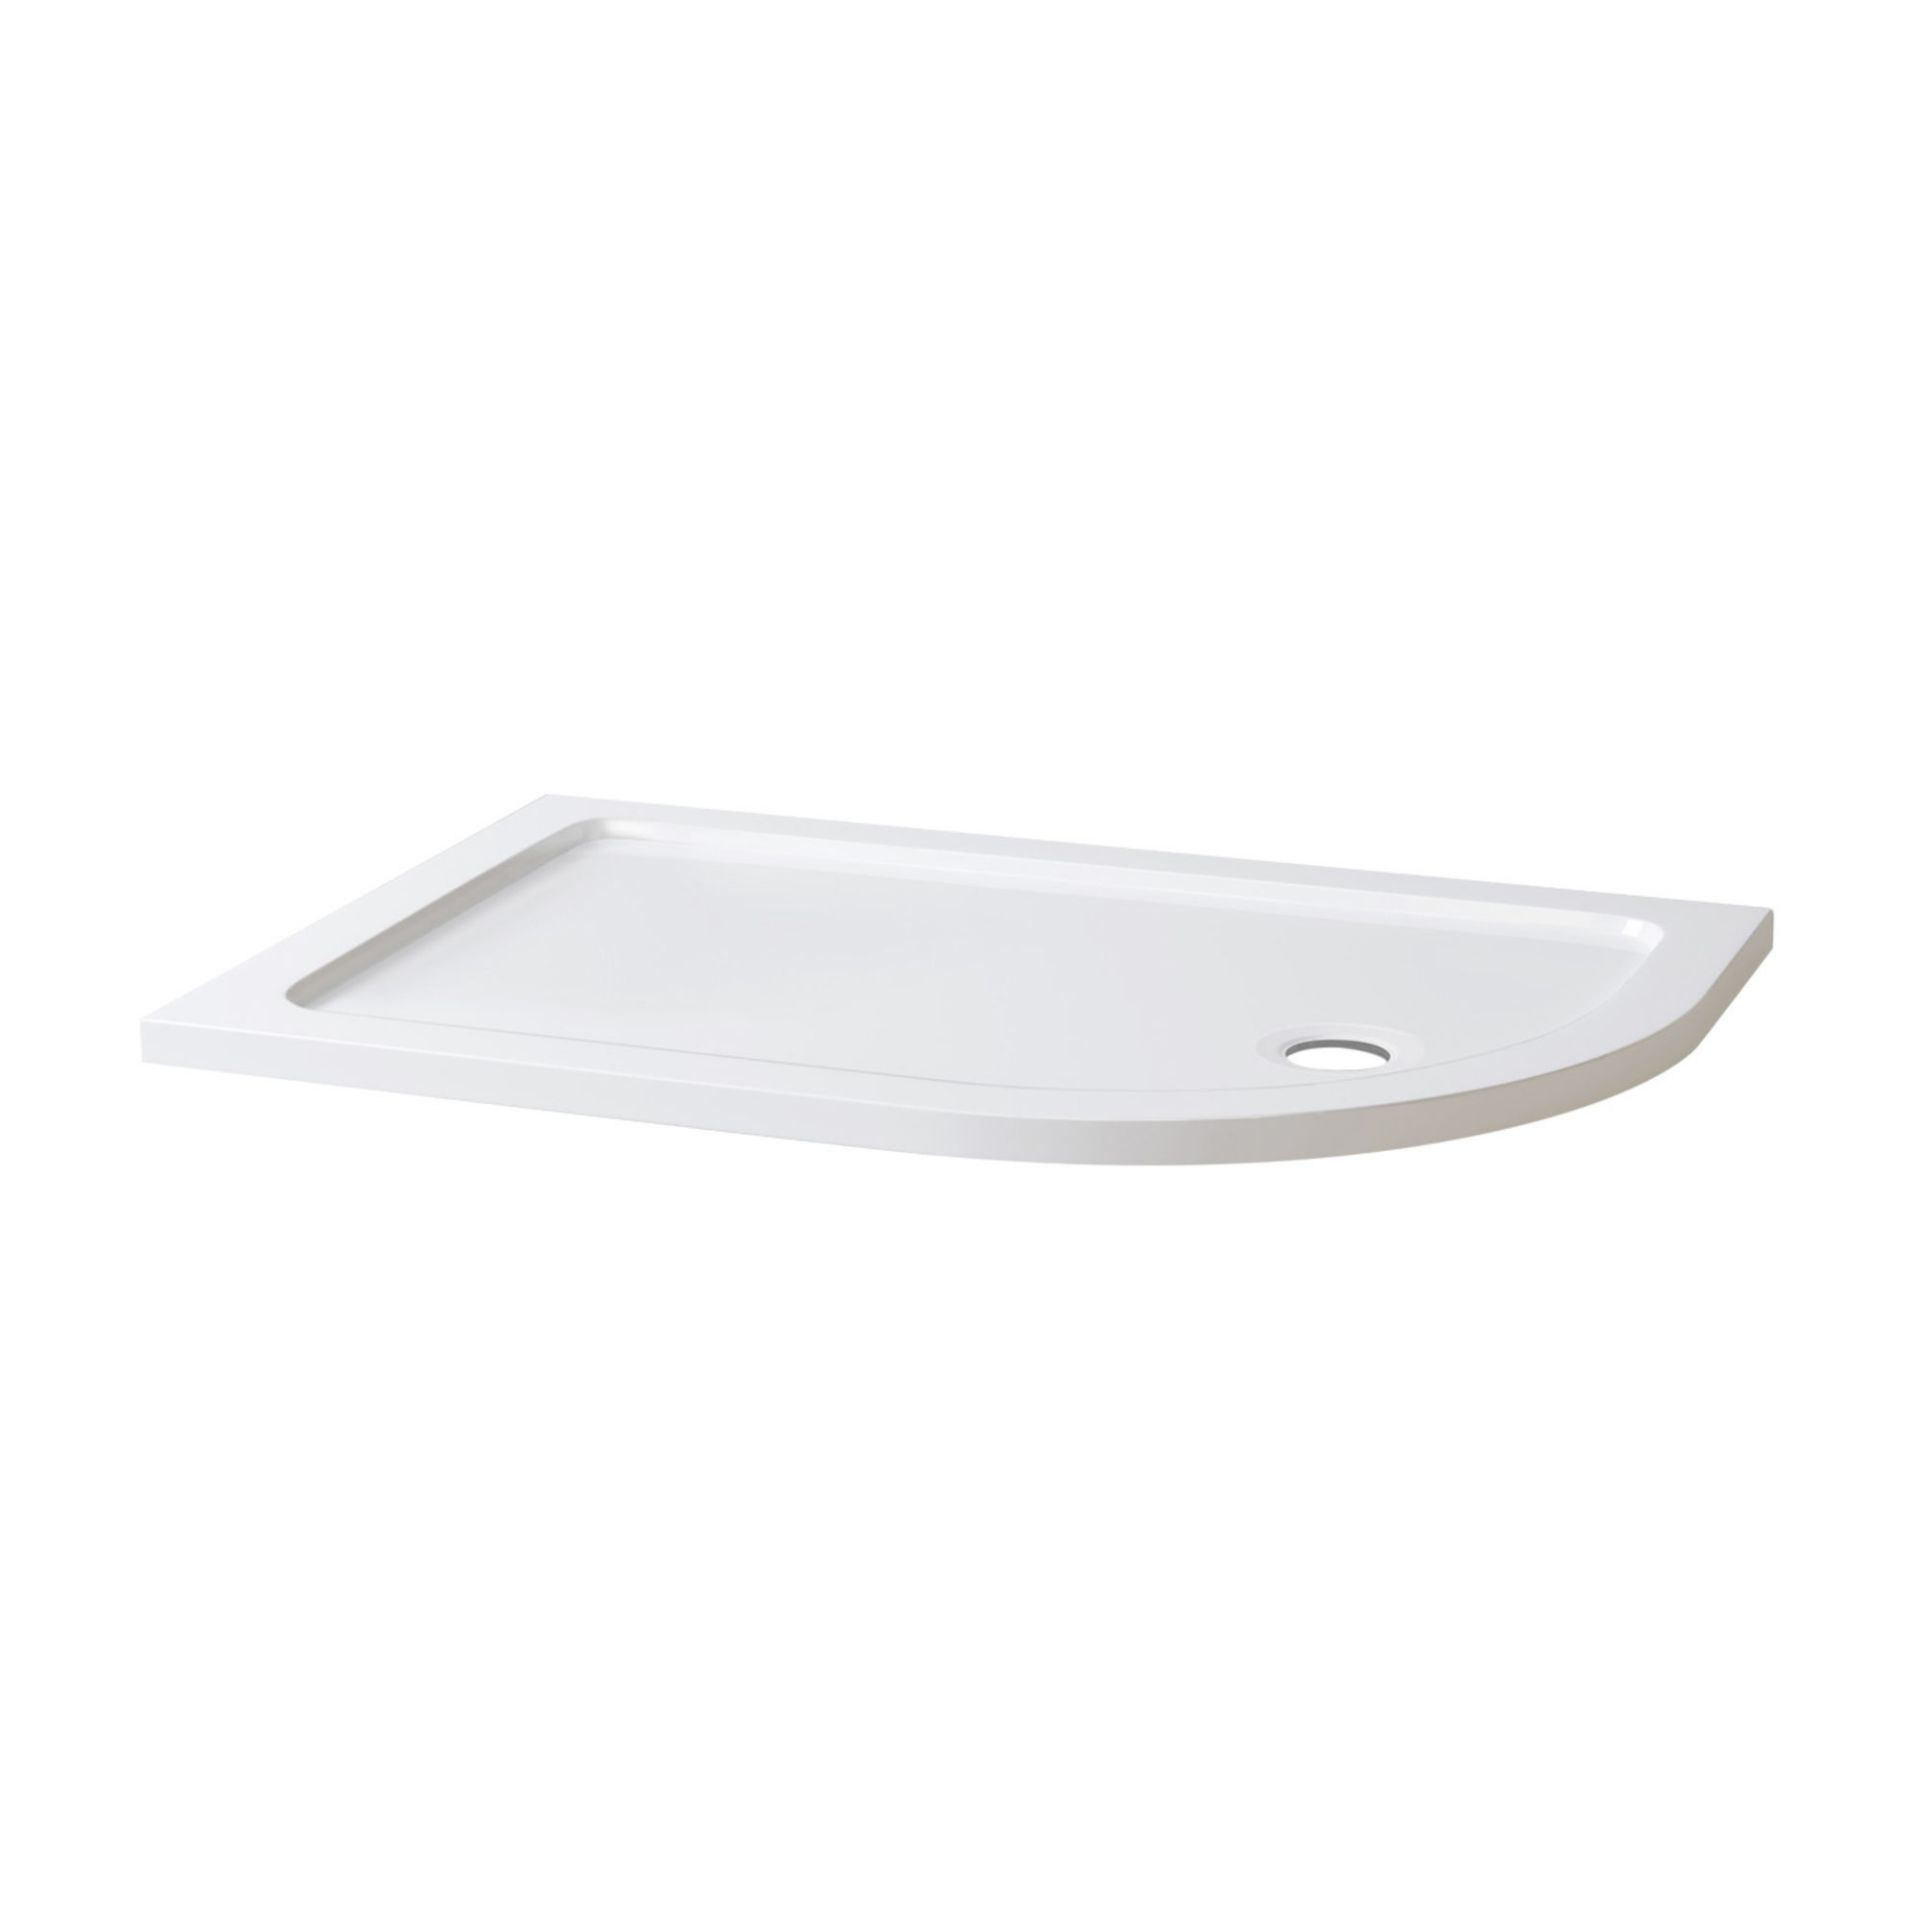 (DK235) 1200x800mm Offset Quadrant Ultra Slim Stone Shower Tray - Right. Low profile ultra slim - Image 2 of 2